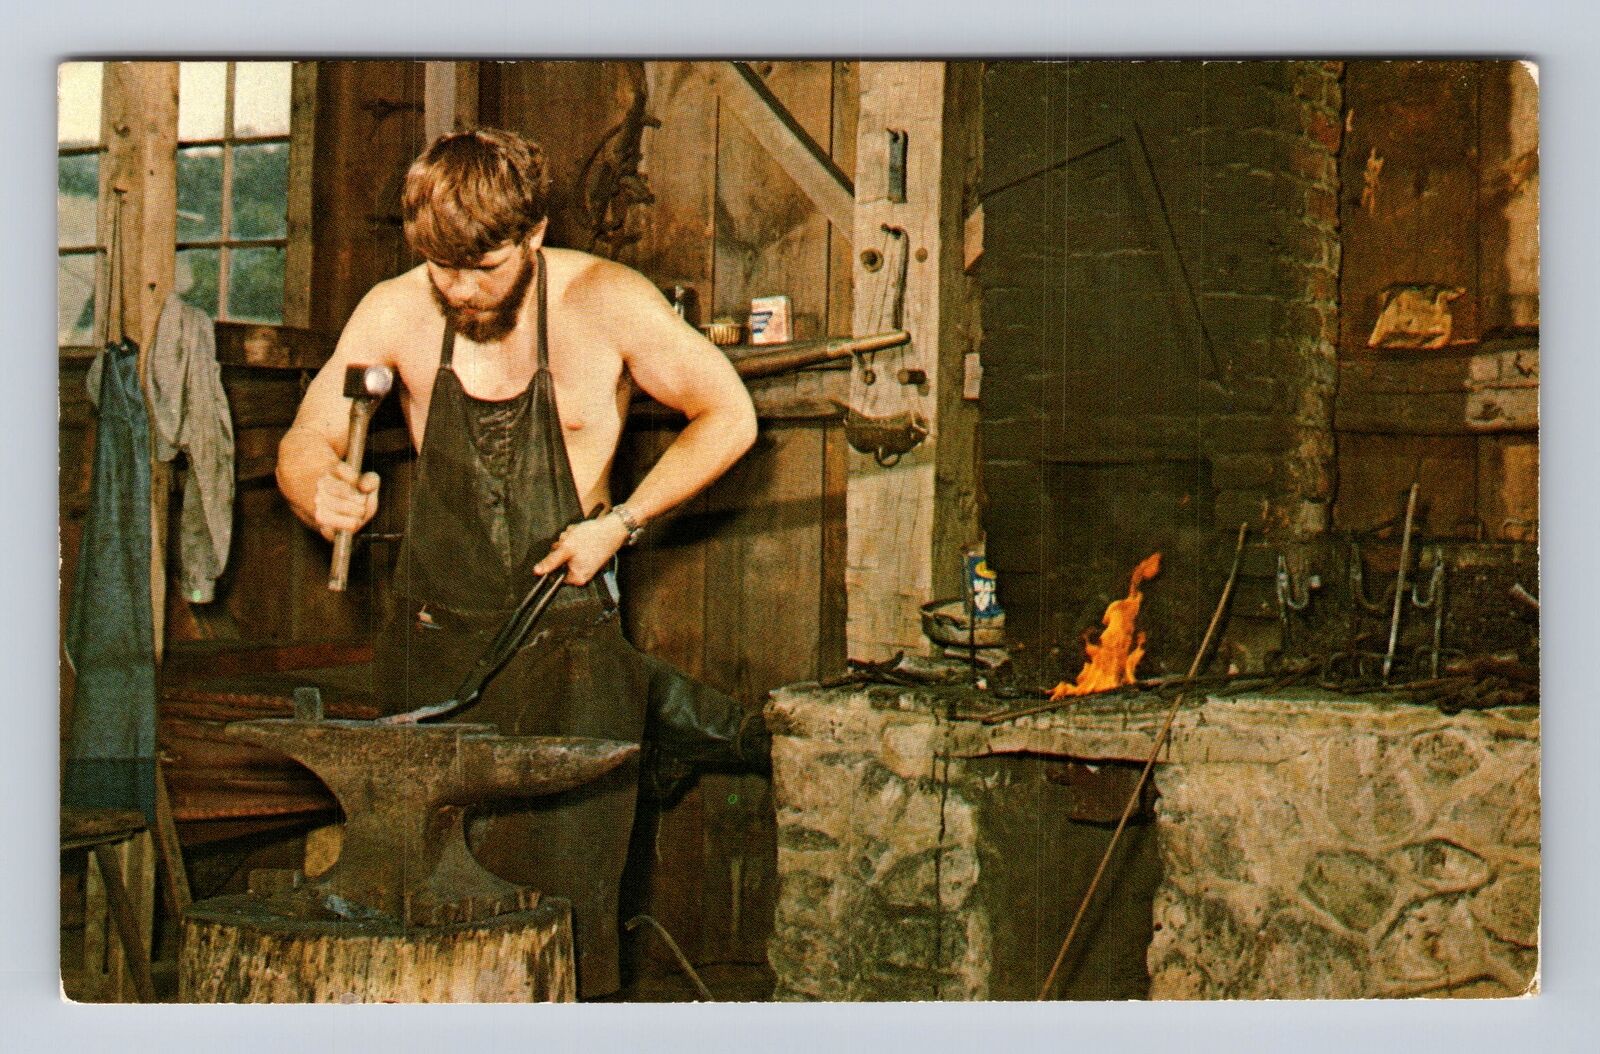 Bath OH-Ohio, Blacksmithing, Restored 19th Century Village Vintage Postcard